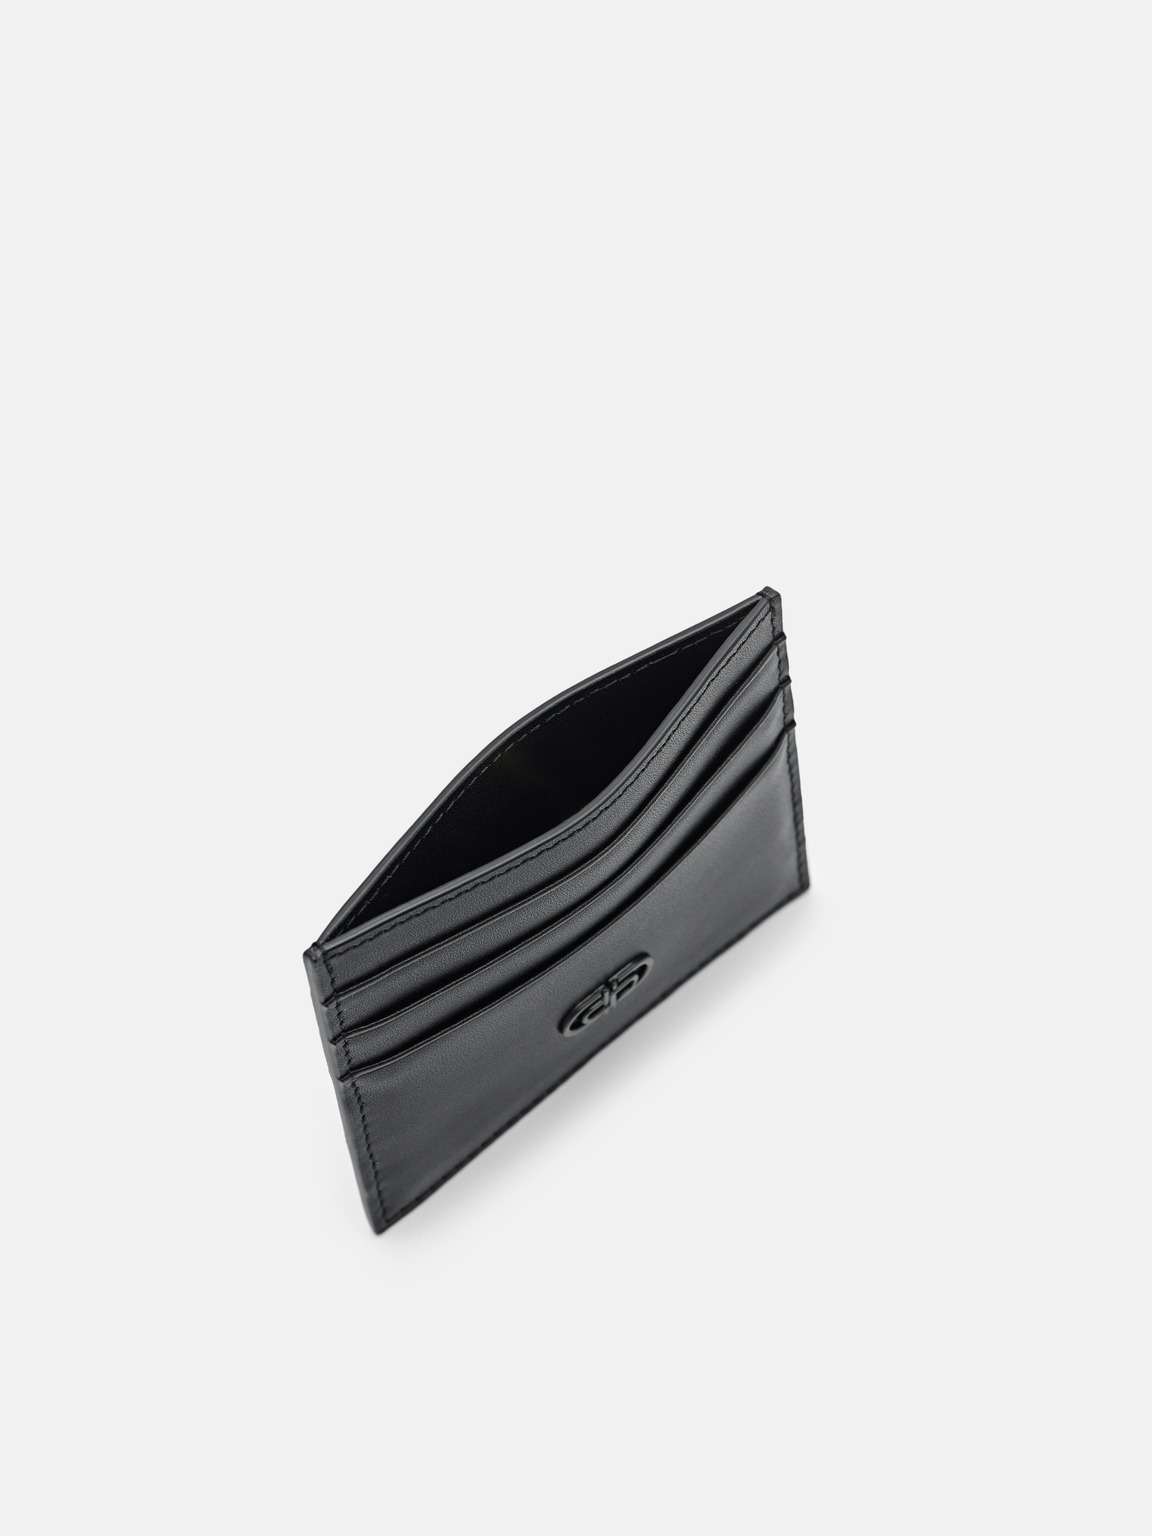 PEDRO Icon Leather Card Holder, Black